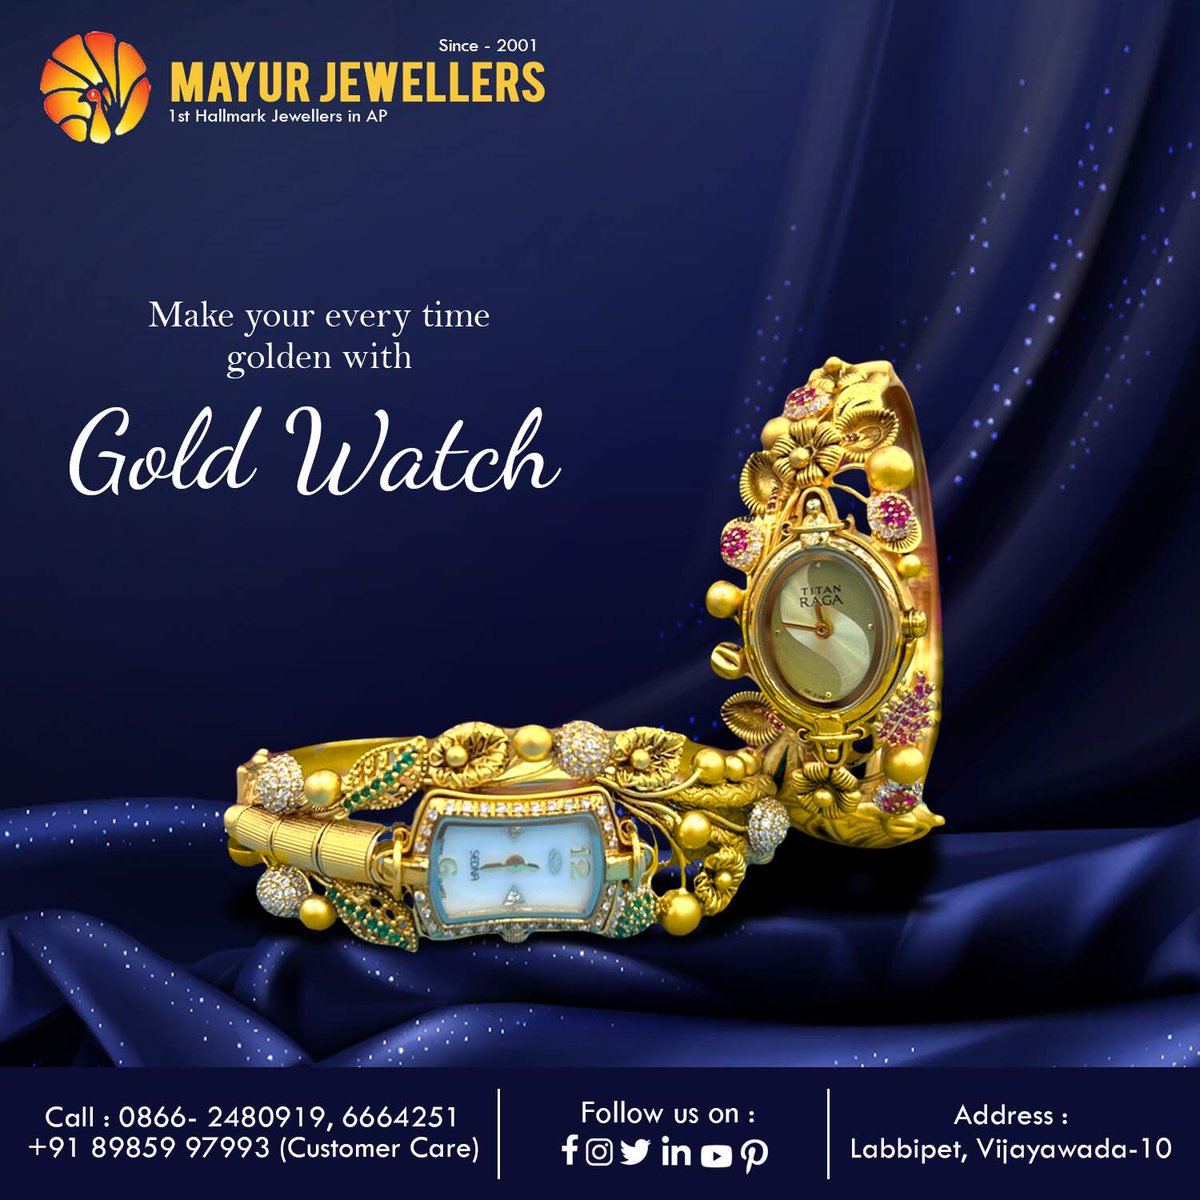 Make Your Every Time Golden with Gold Watch!

#mayurjewellers #mayurjewellersvijayawada #goldjewellery #templejewellery #latestjewellerydesigns #goldjewelery #gold #mayur #hallmarkjewellery #hallmarkgoldjewelery #goldwatch #watch #goldwatchlatestdesigns